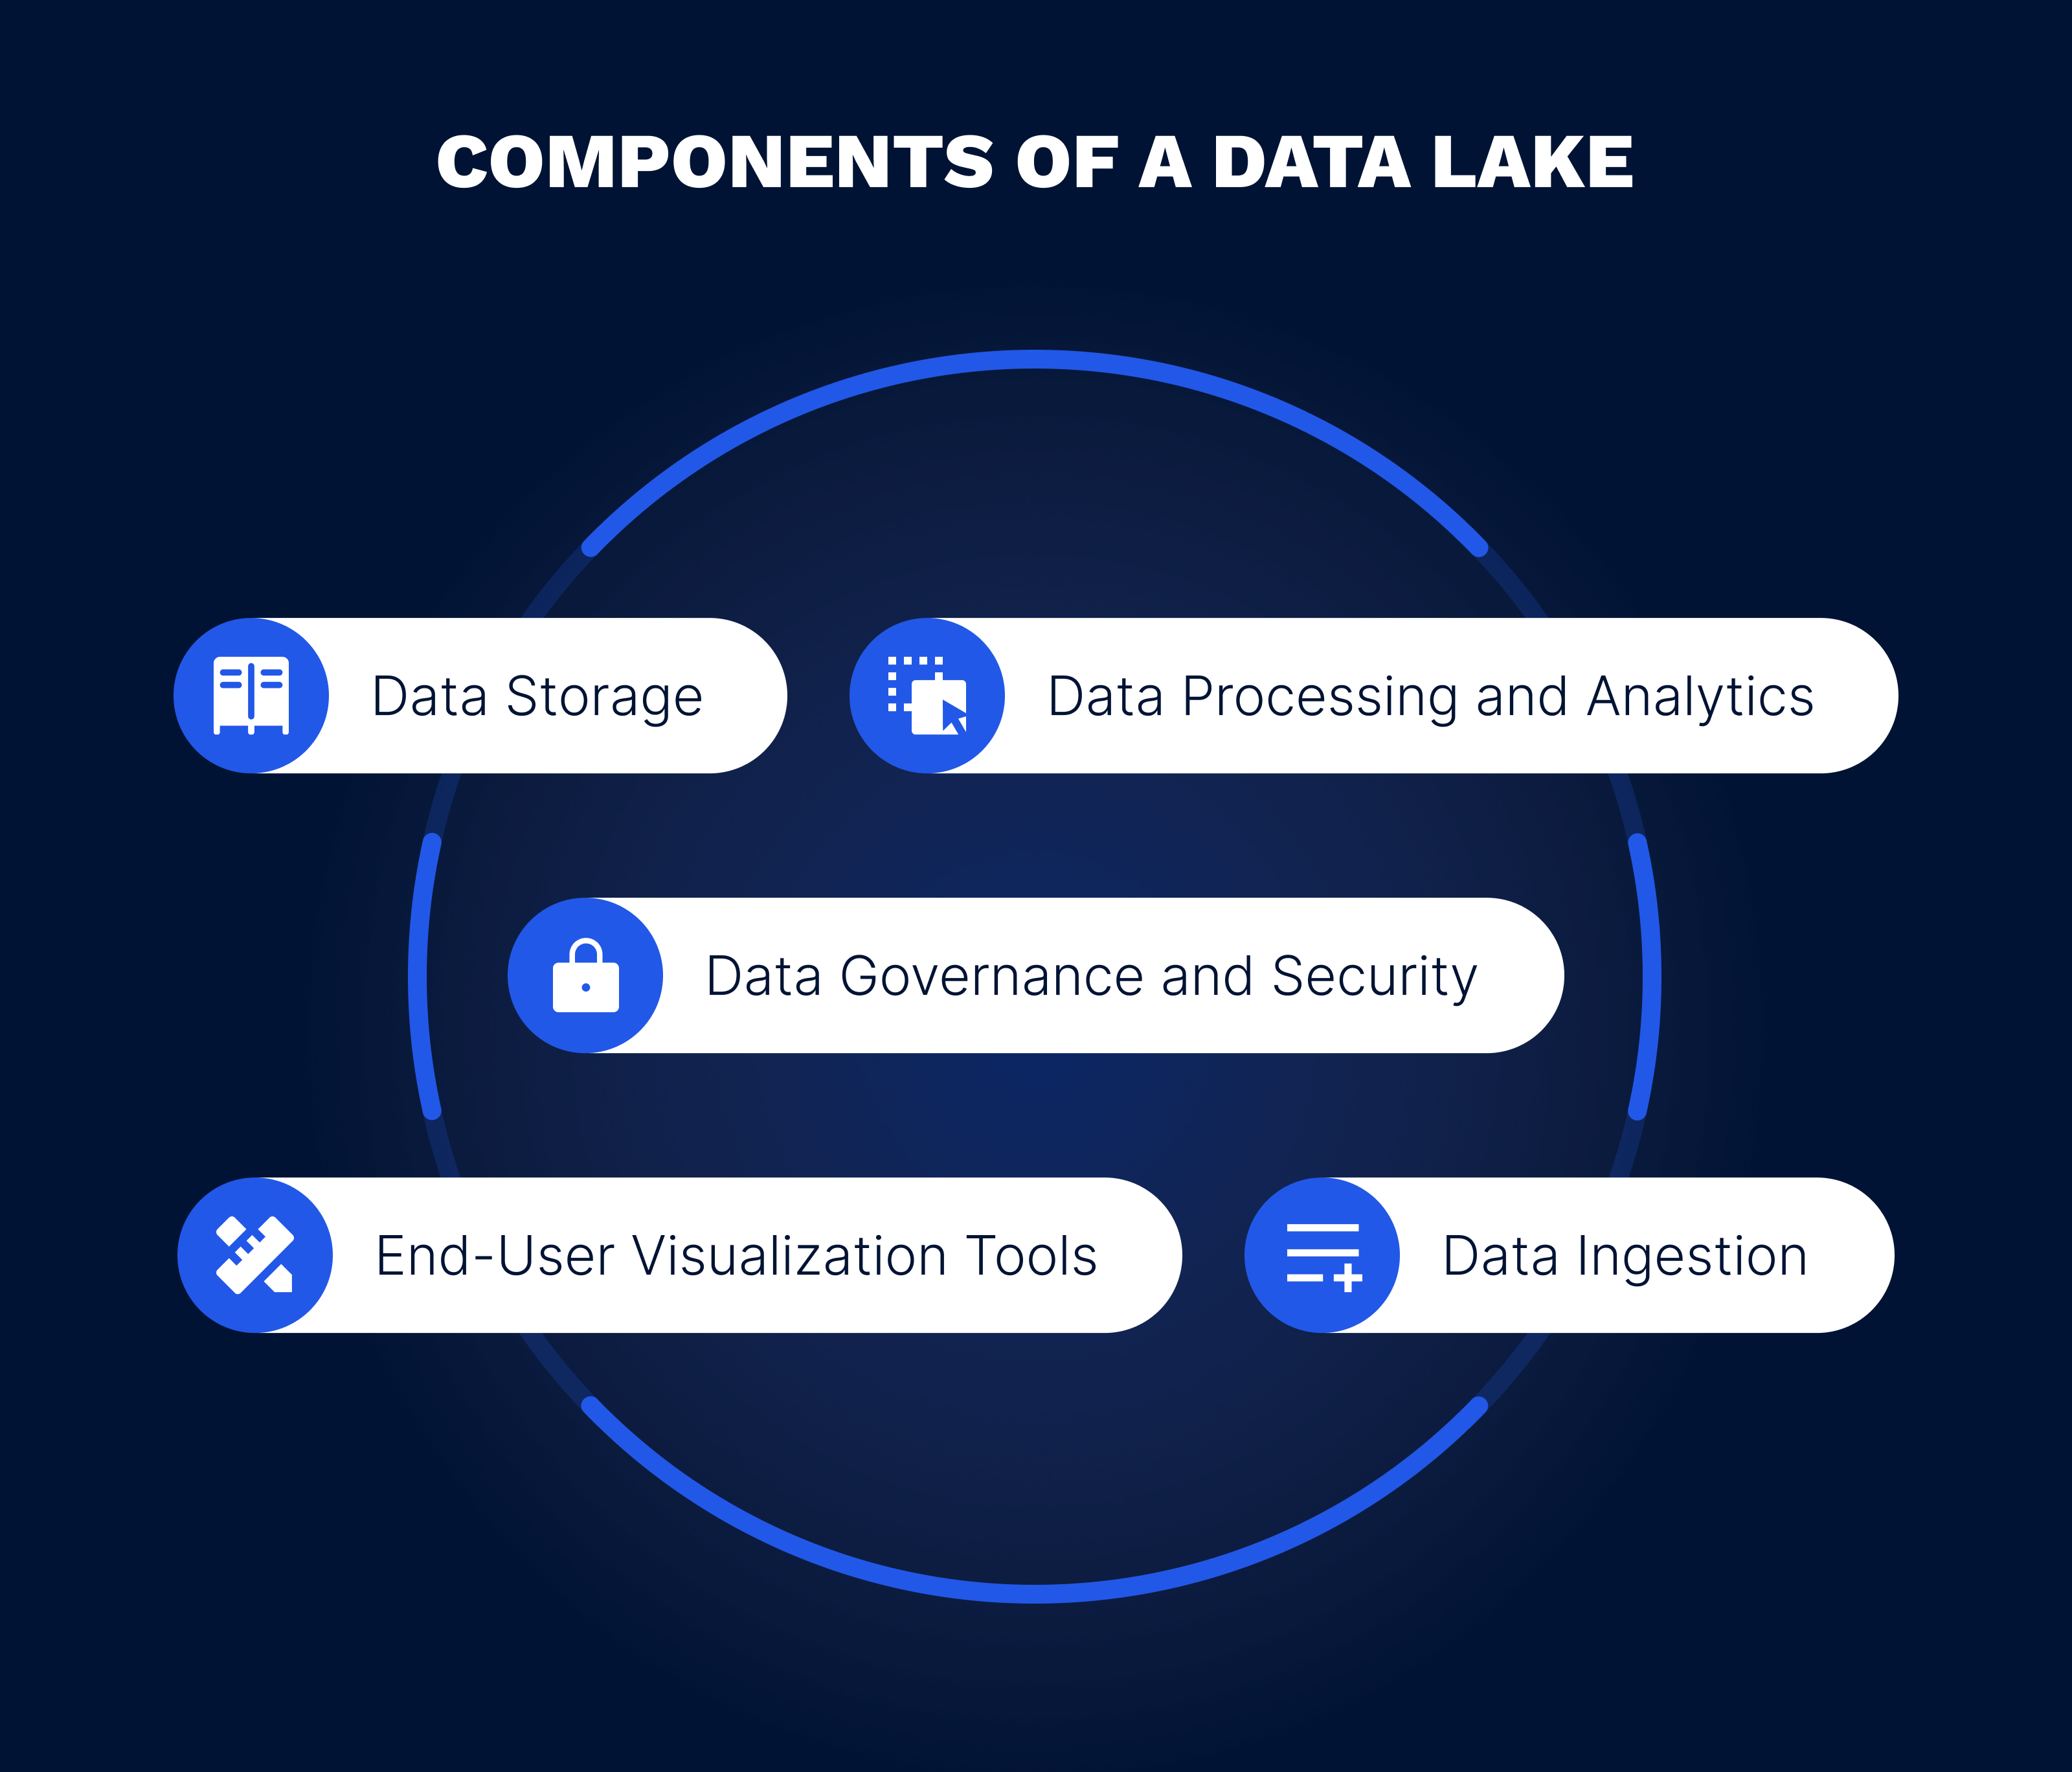 Key components of a data lake